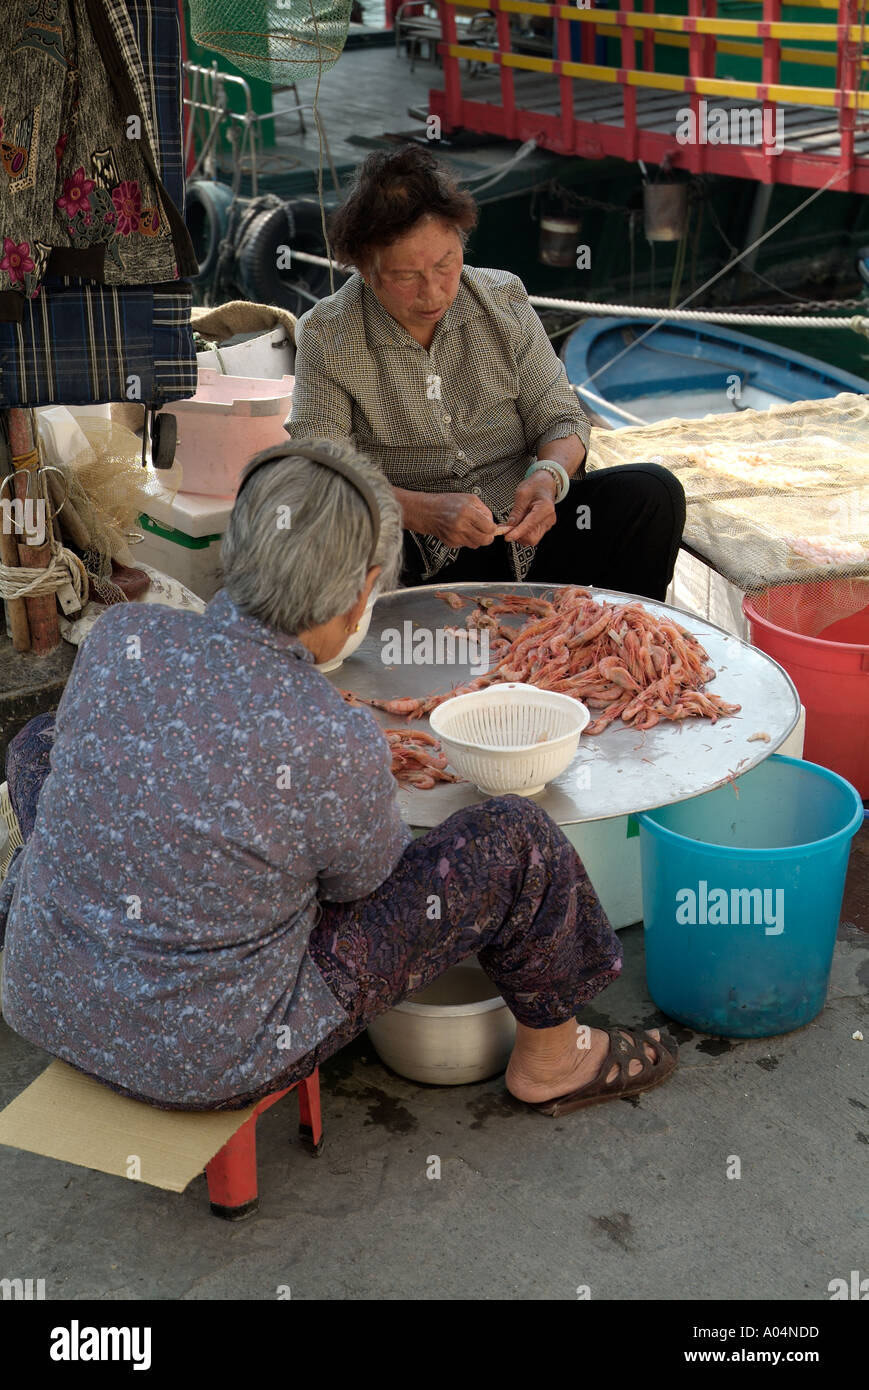 dh Chinesische Frauen Fischmarkt ABERDEEN HONGKONG Sortierung frisch Meeresfrüchte Garnelen am Kai Ältere Menschen Ältere Frau china Essen Lokale Schalentiere Stockfoto